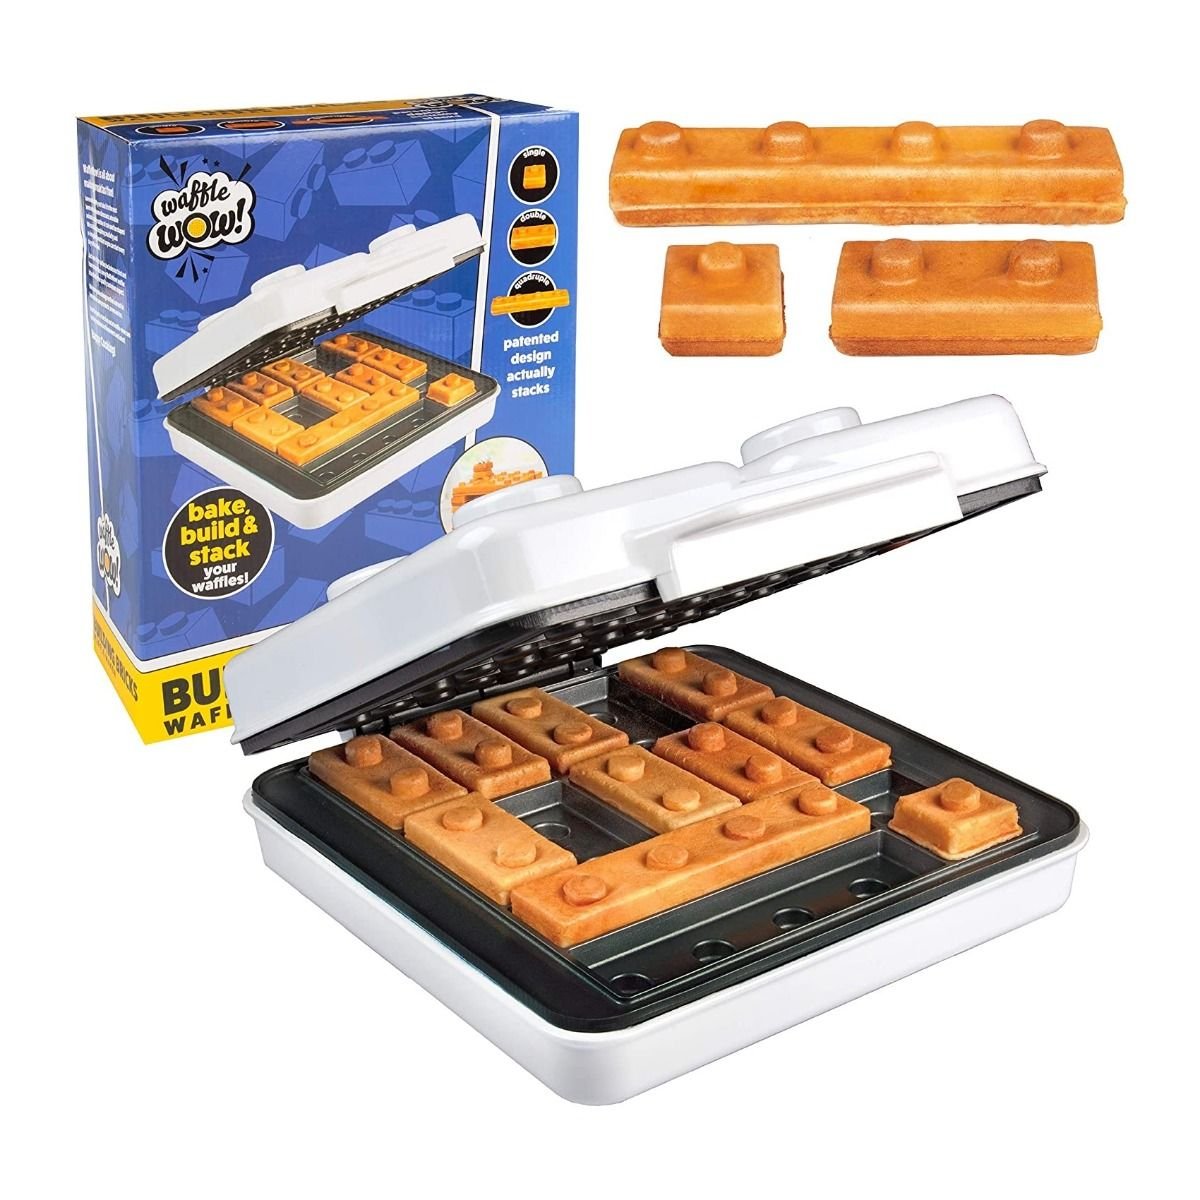 CucinaPro Building Brick Electric Waffle Maker produces 14 fun